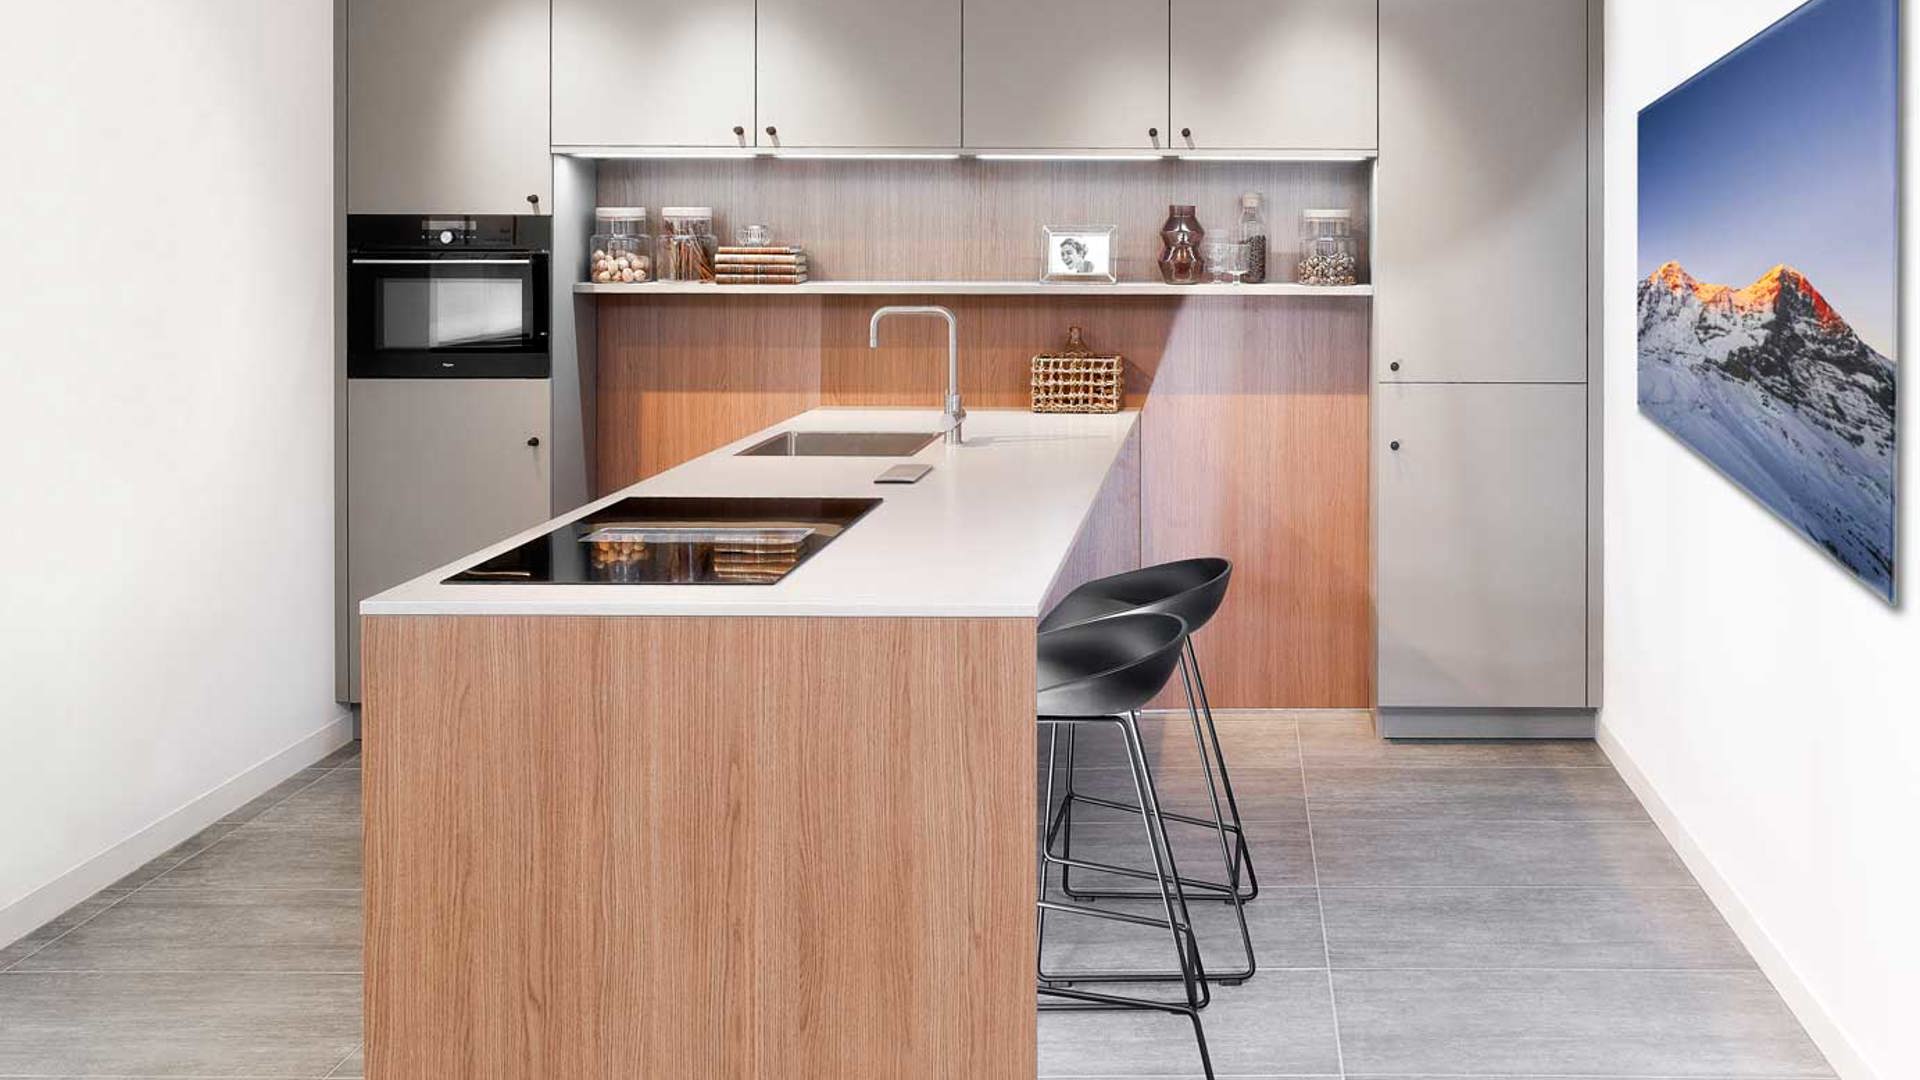 Strakke moderne keuken met kookeiland en bar